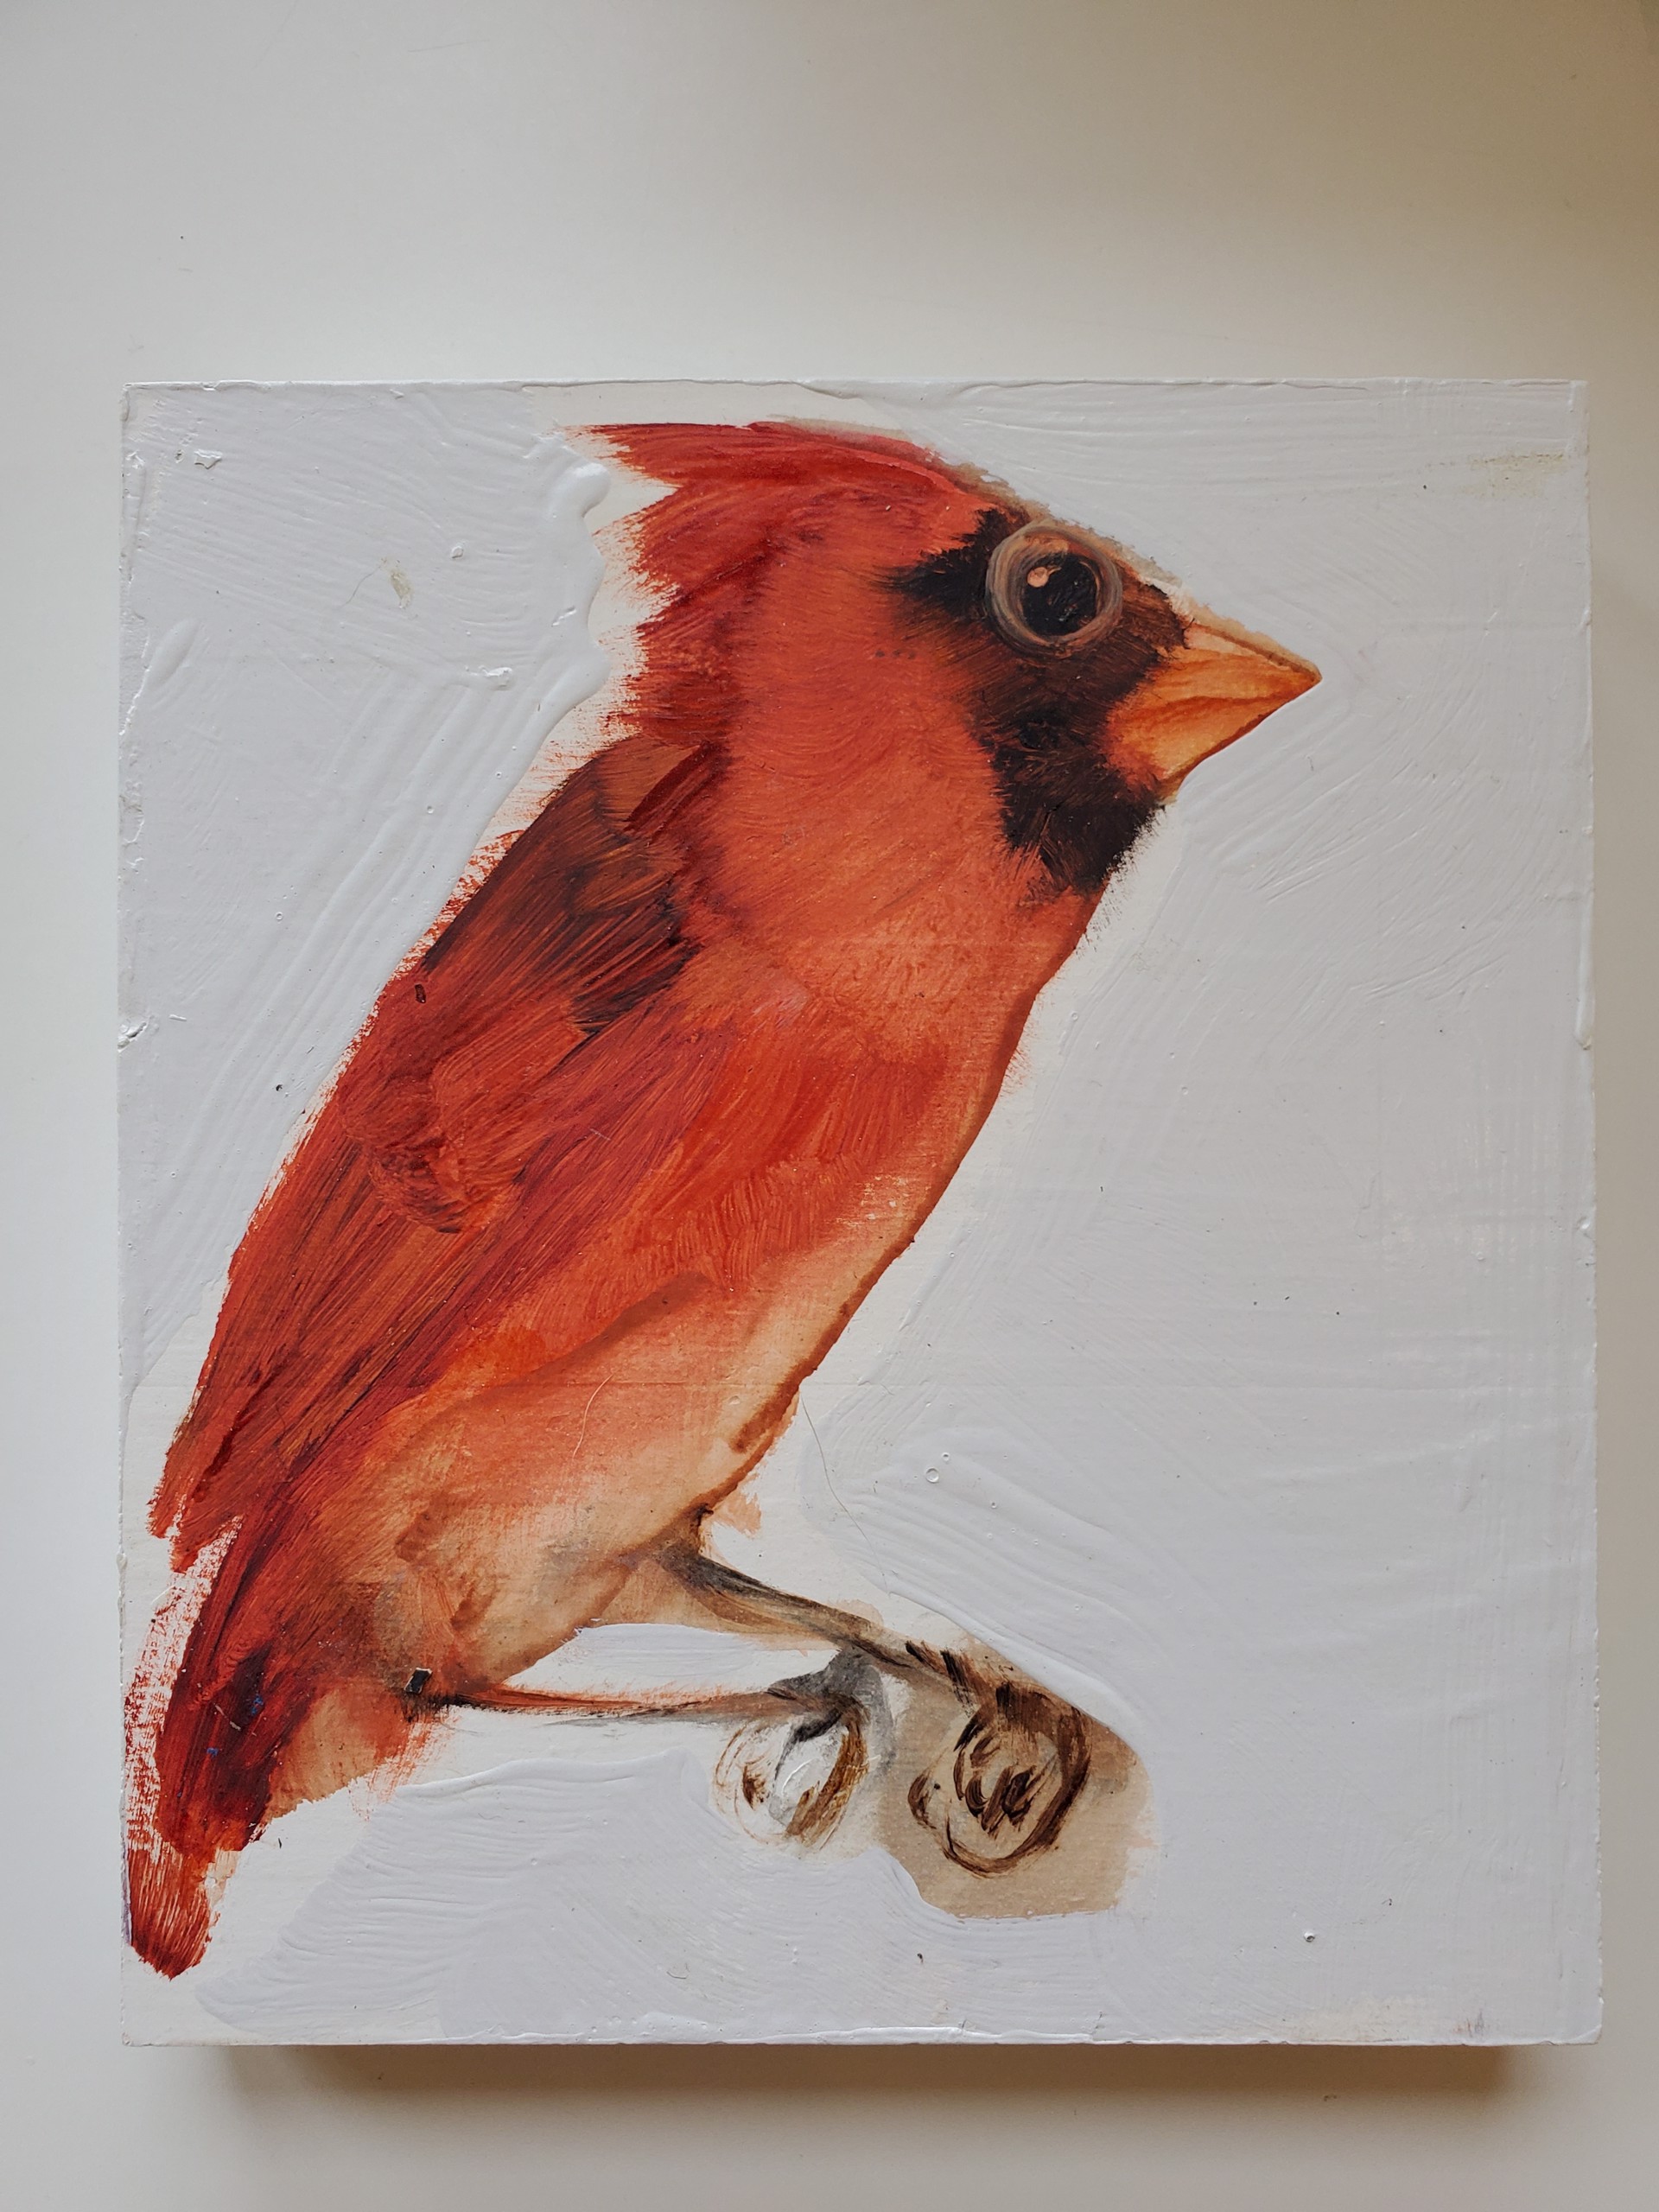 Medium bird block by Diane Kilgore Condon